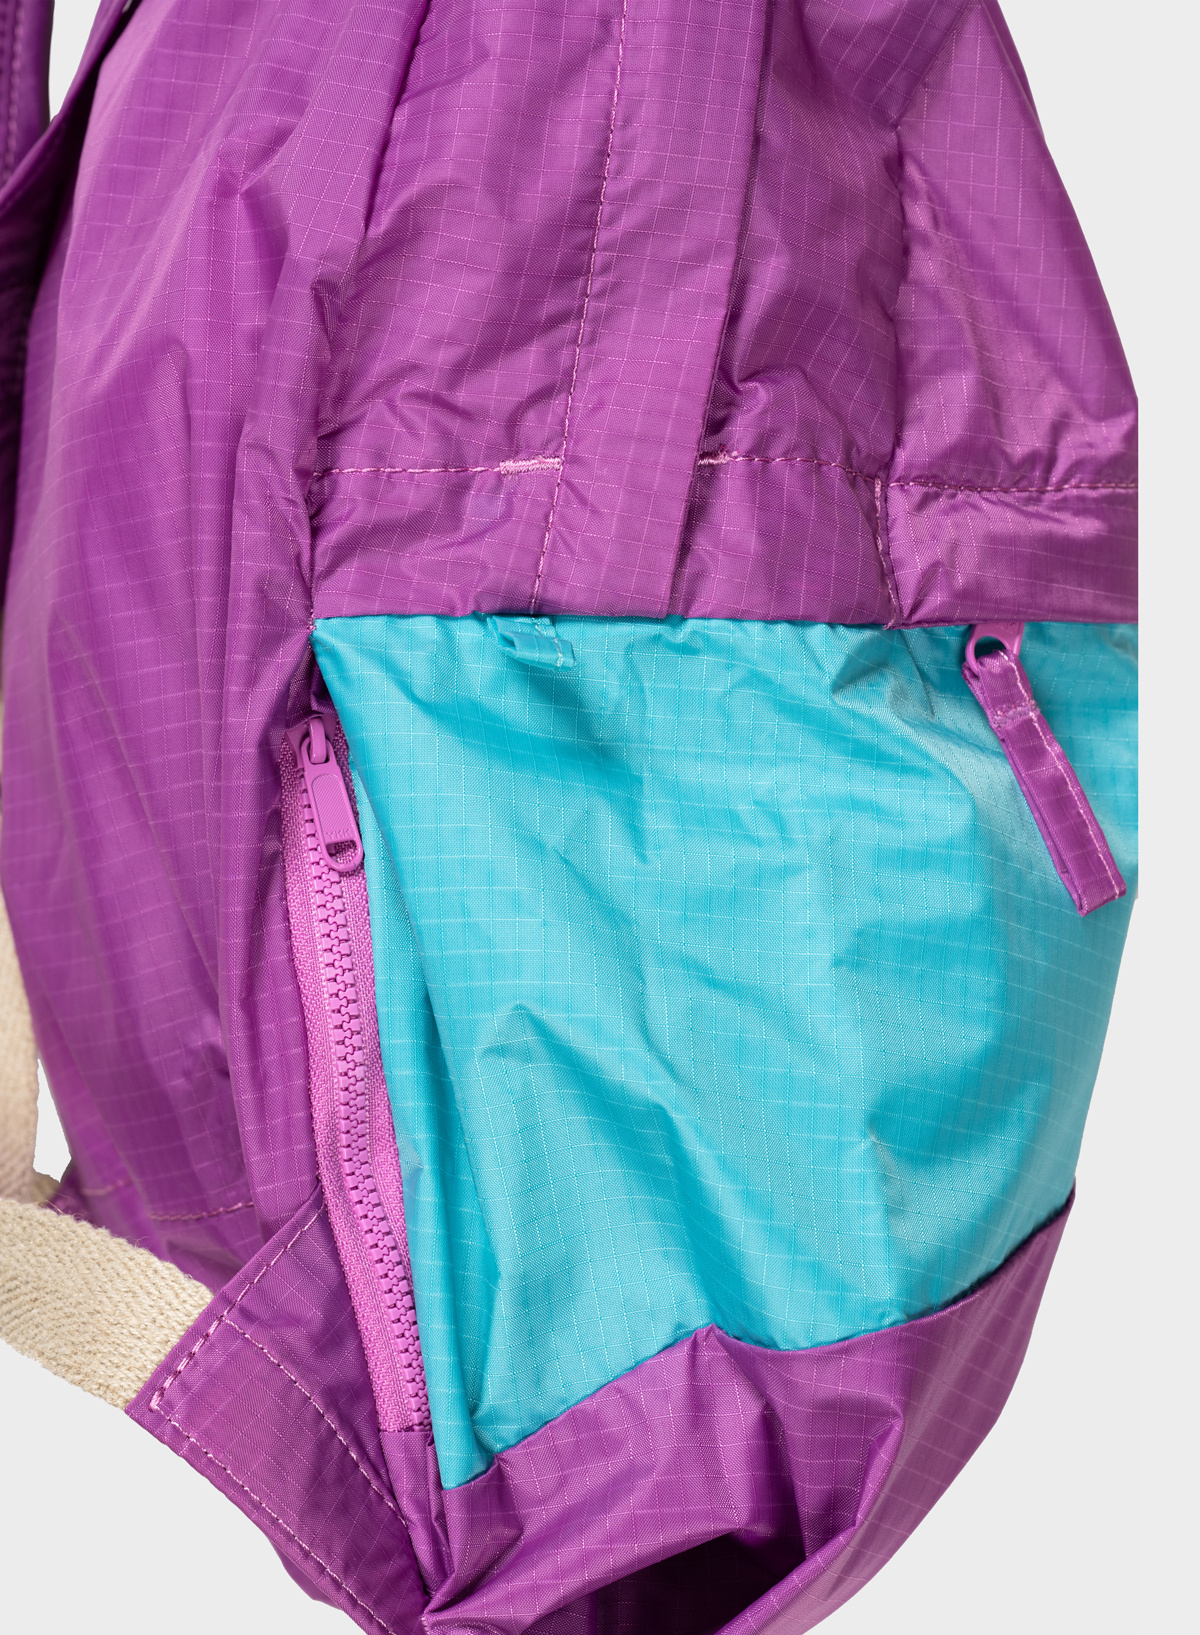 Susan Bijl The New Foldable Backpack medium | Echo & Drive